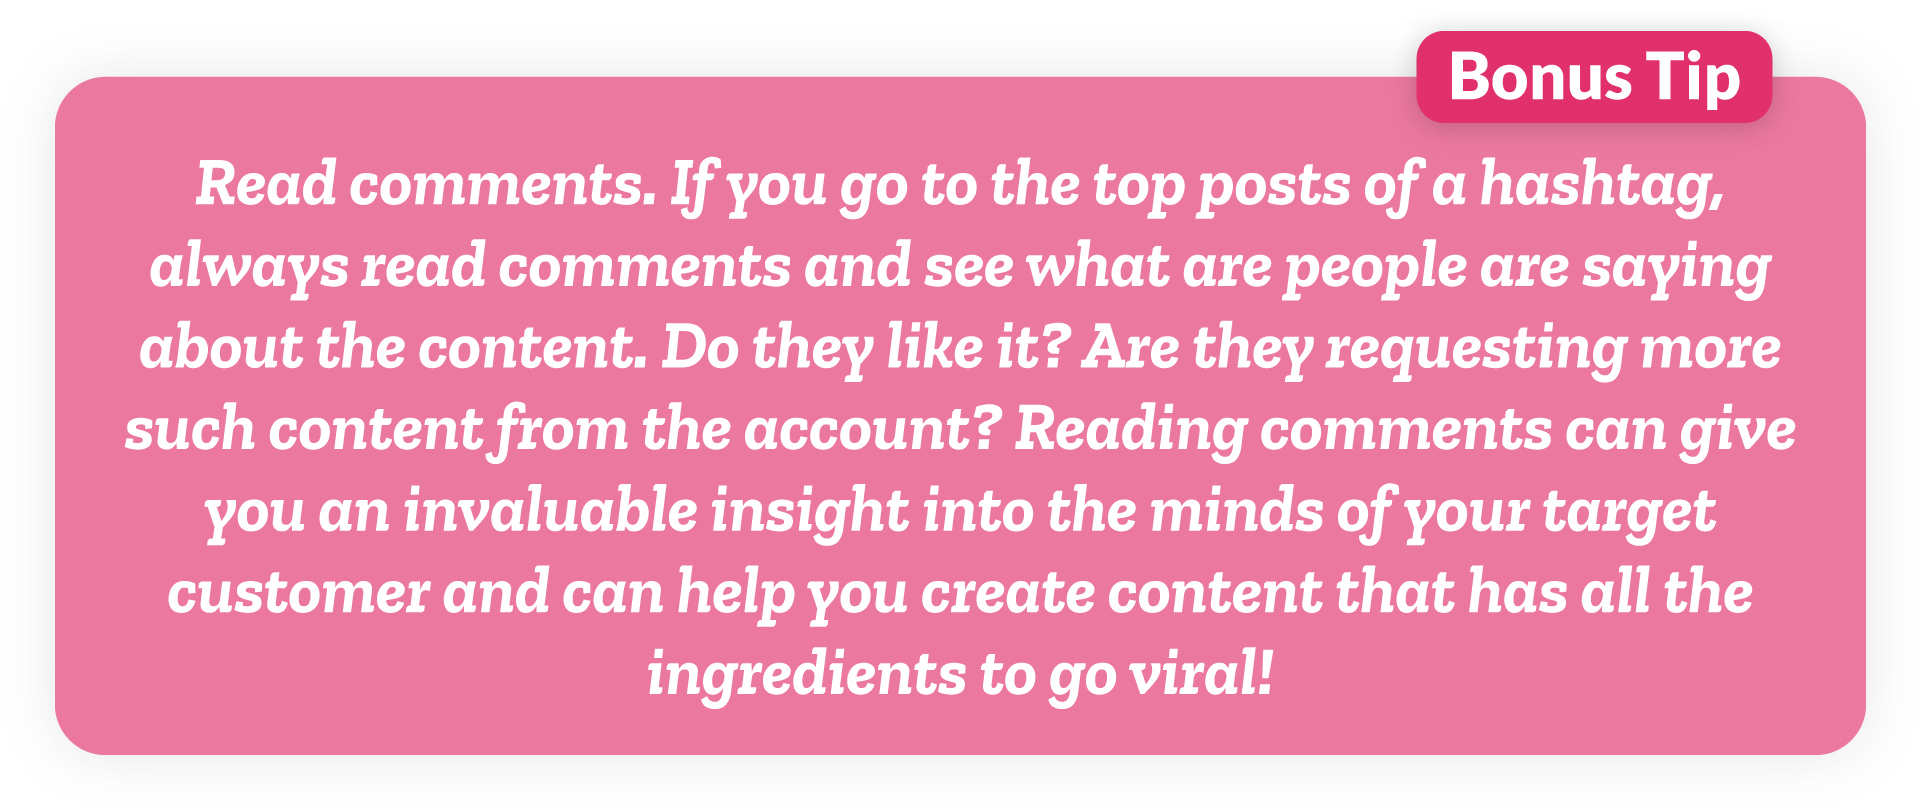 Bonus tip for finding top content on Instagram